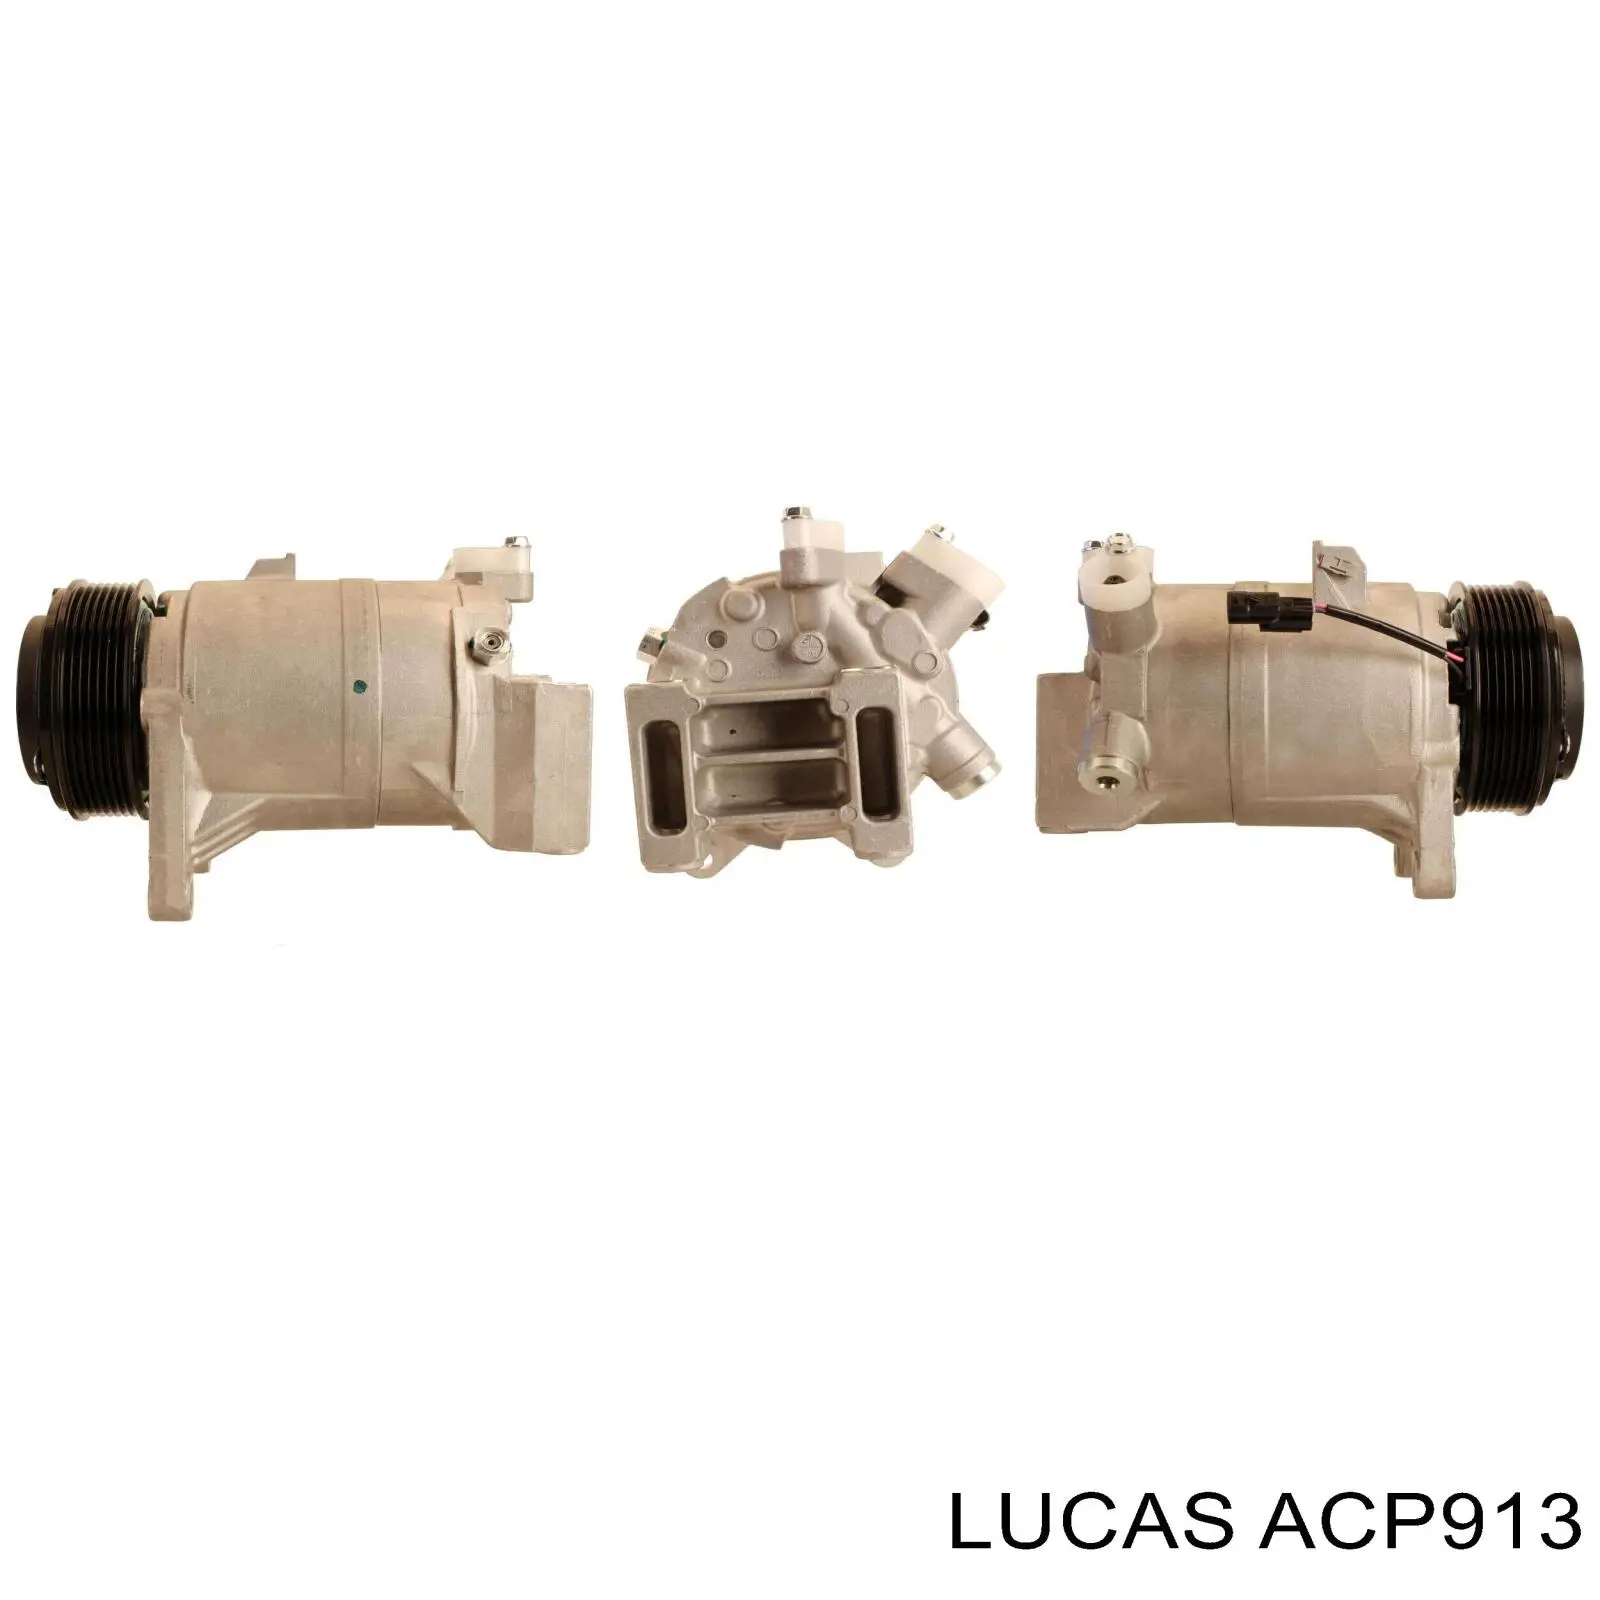 Compresor de aire acondicionado ACP913 Lucas